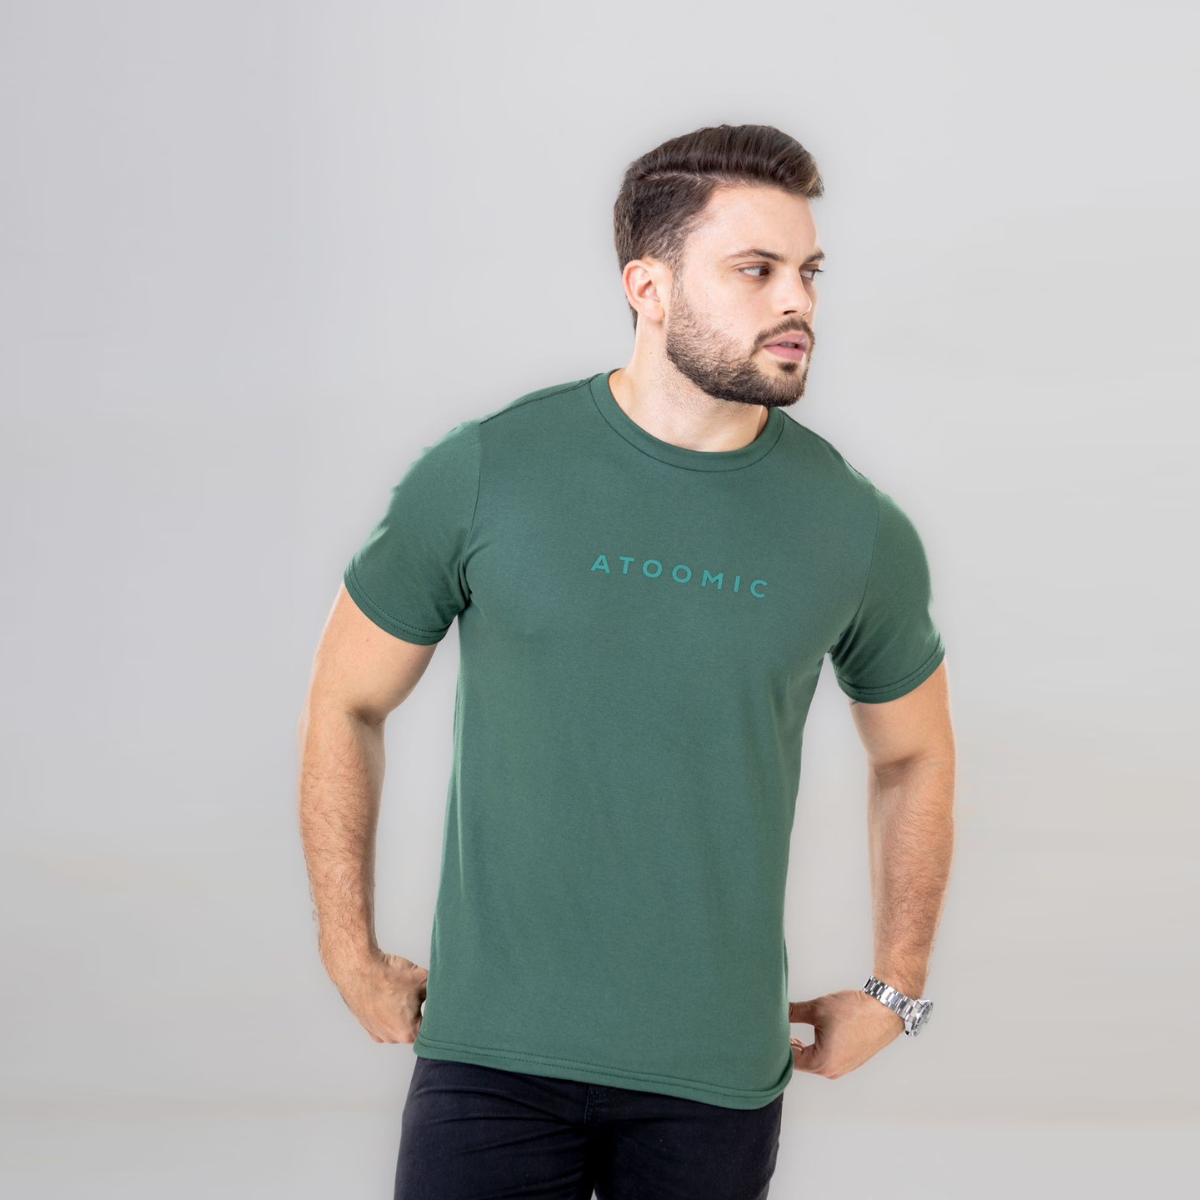 Camiseta Básica Estampa Atoomic - Todas As Cores